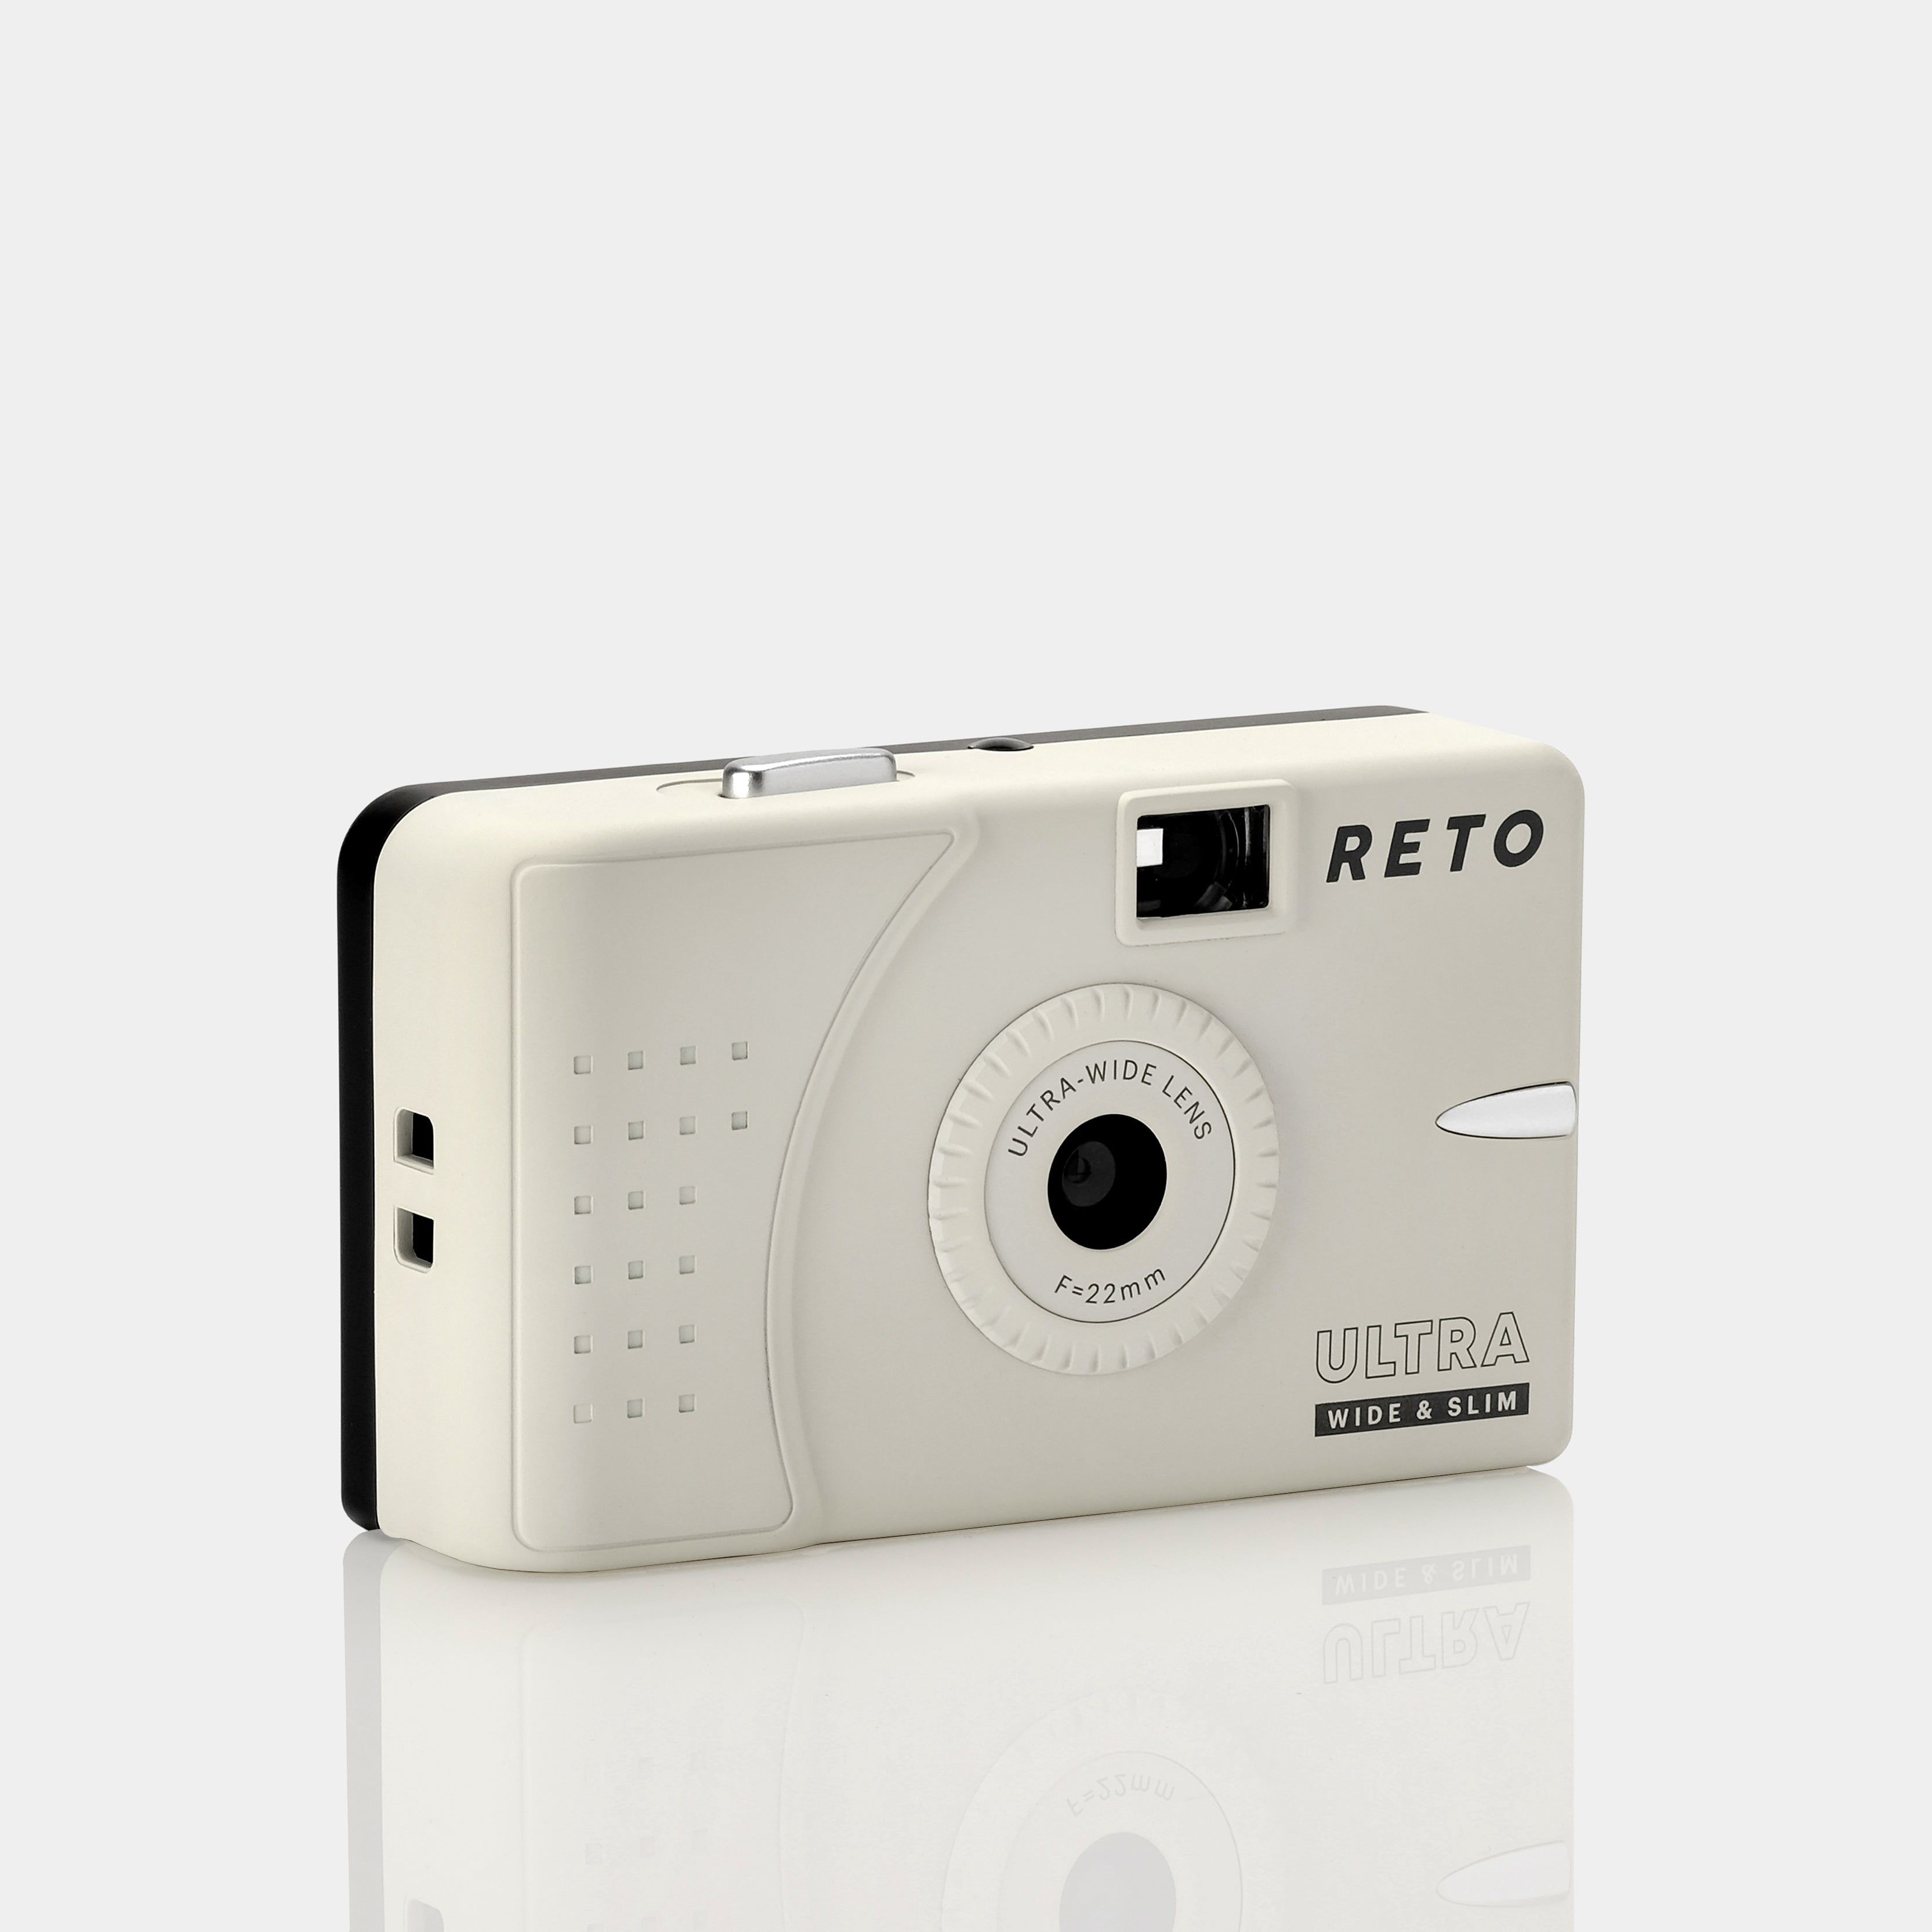 RETO Ultra Wide & Slim Cream 35mm Film Camera